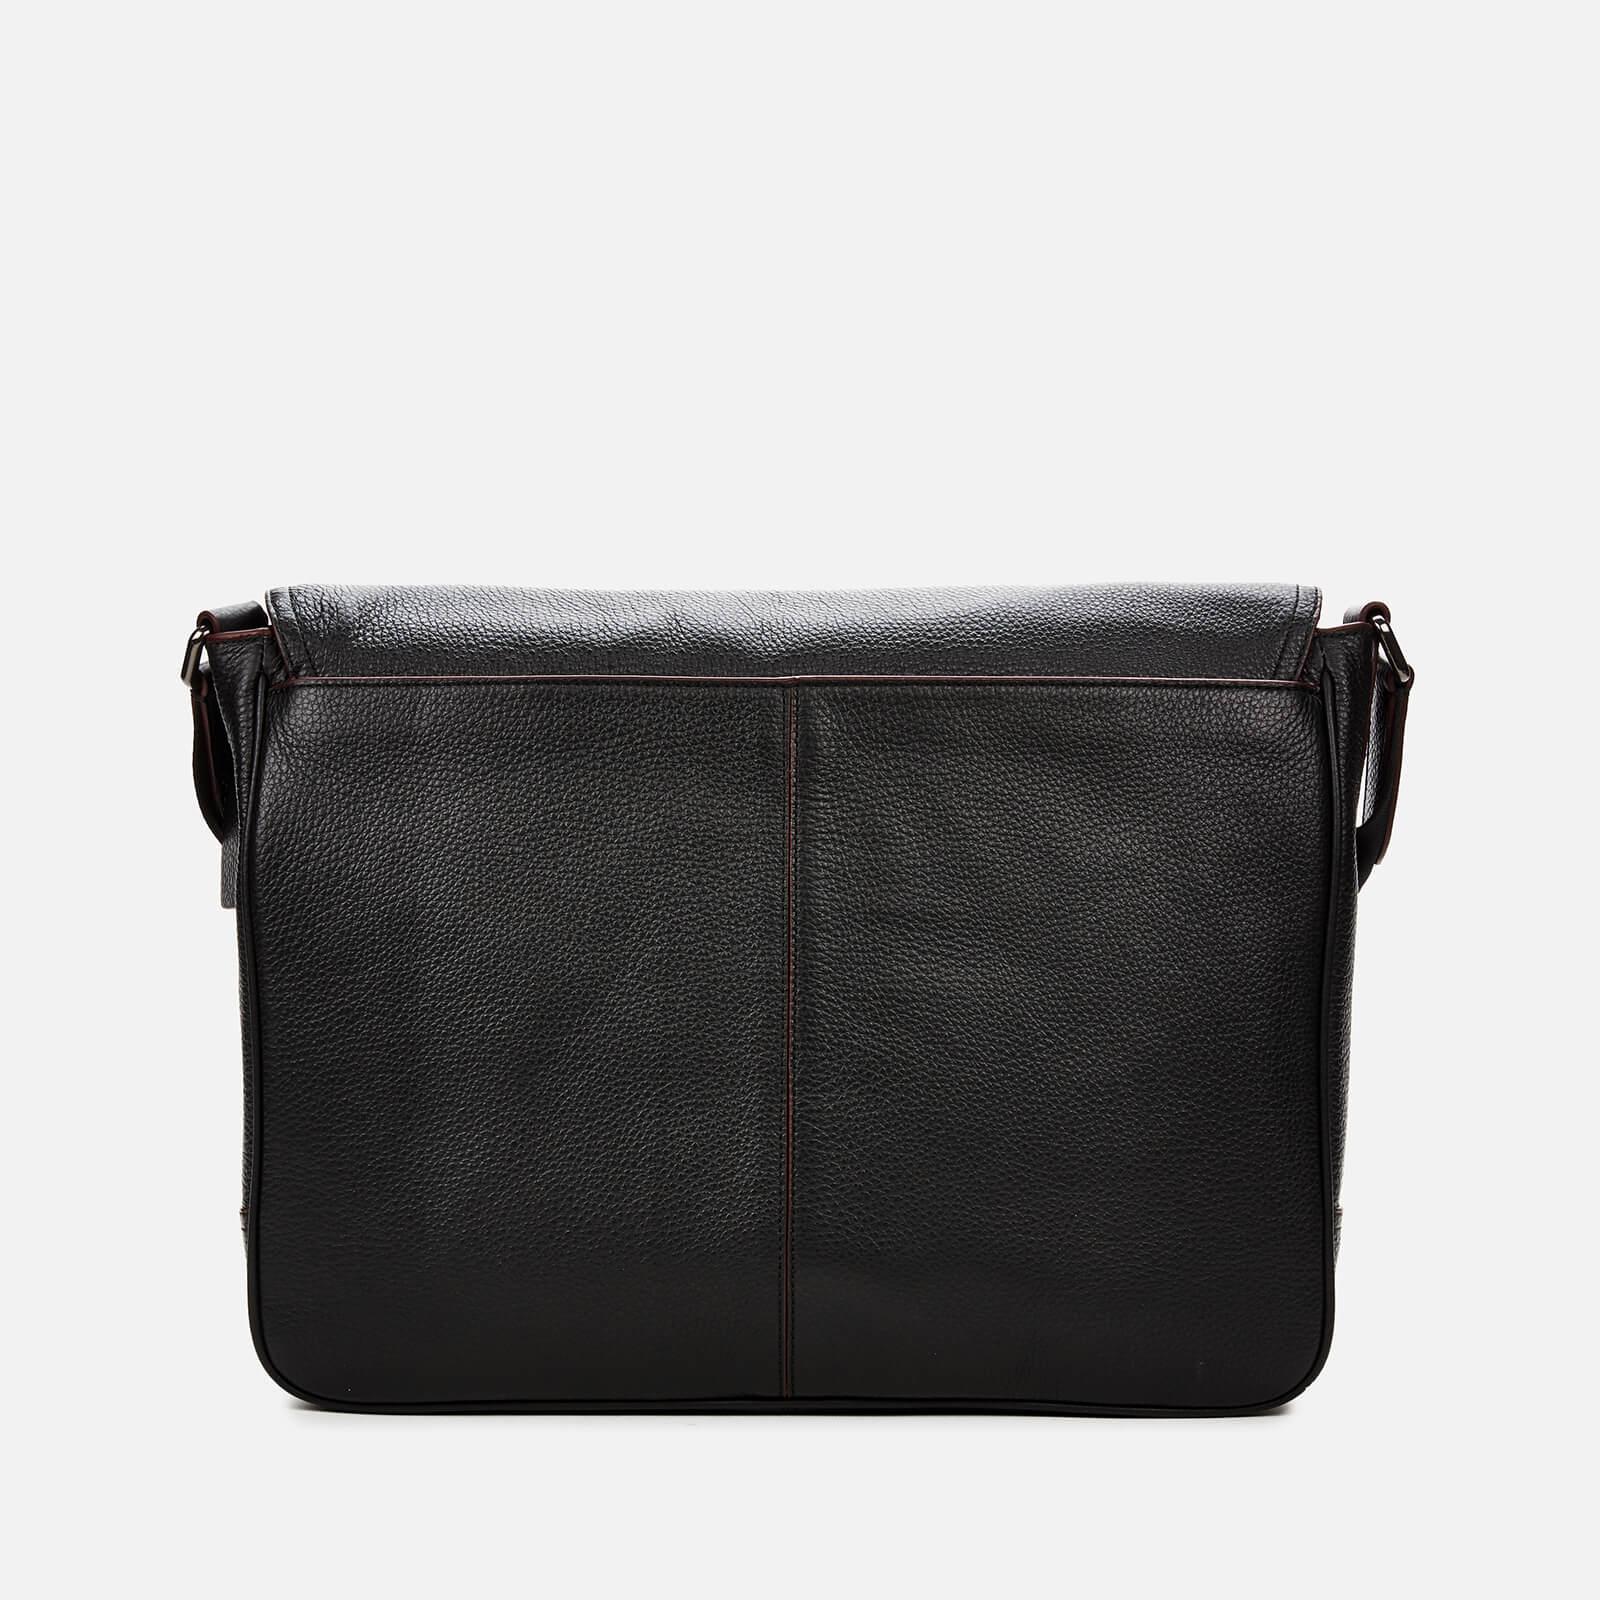 COACH Leather Metropolitan Soft Courier Case in Black for Men - Lyst